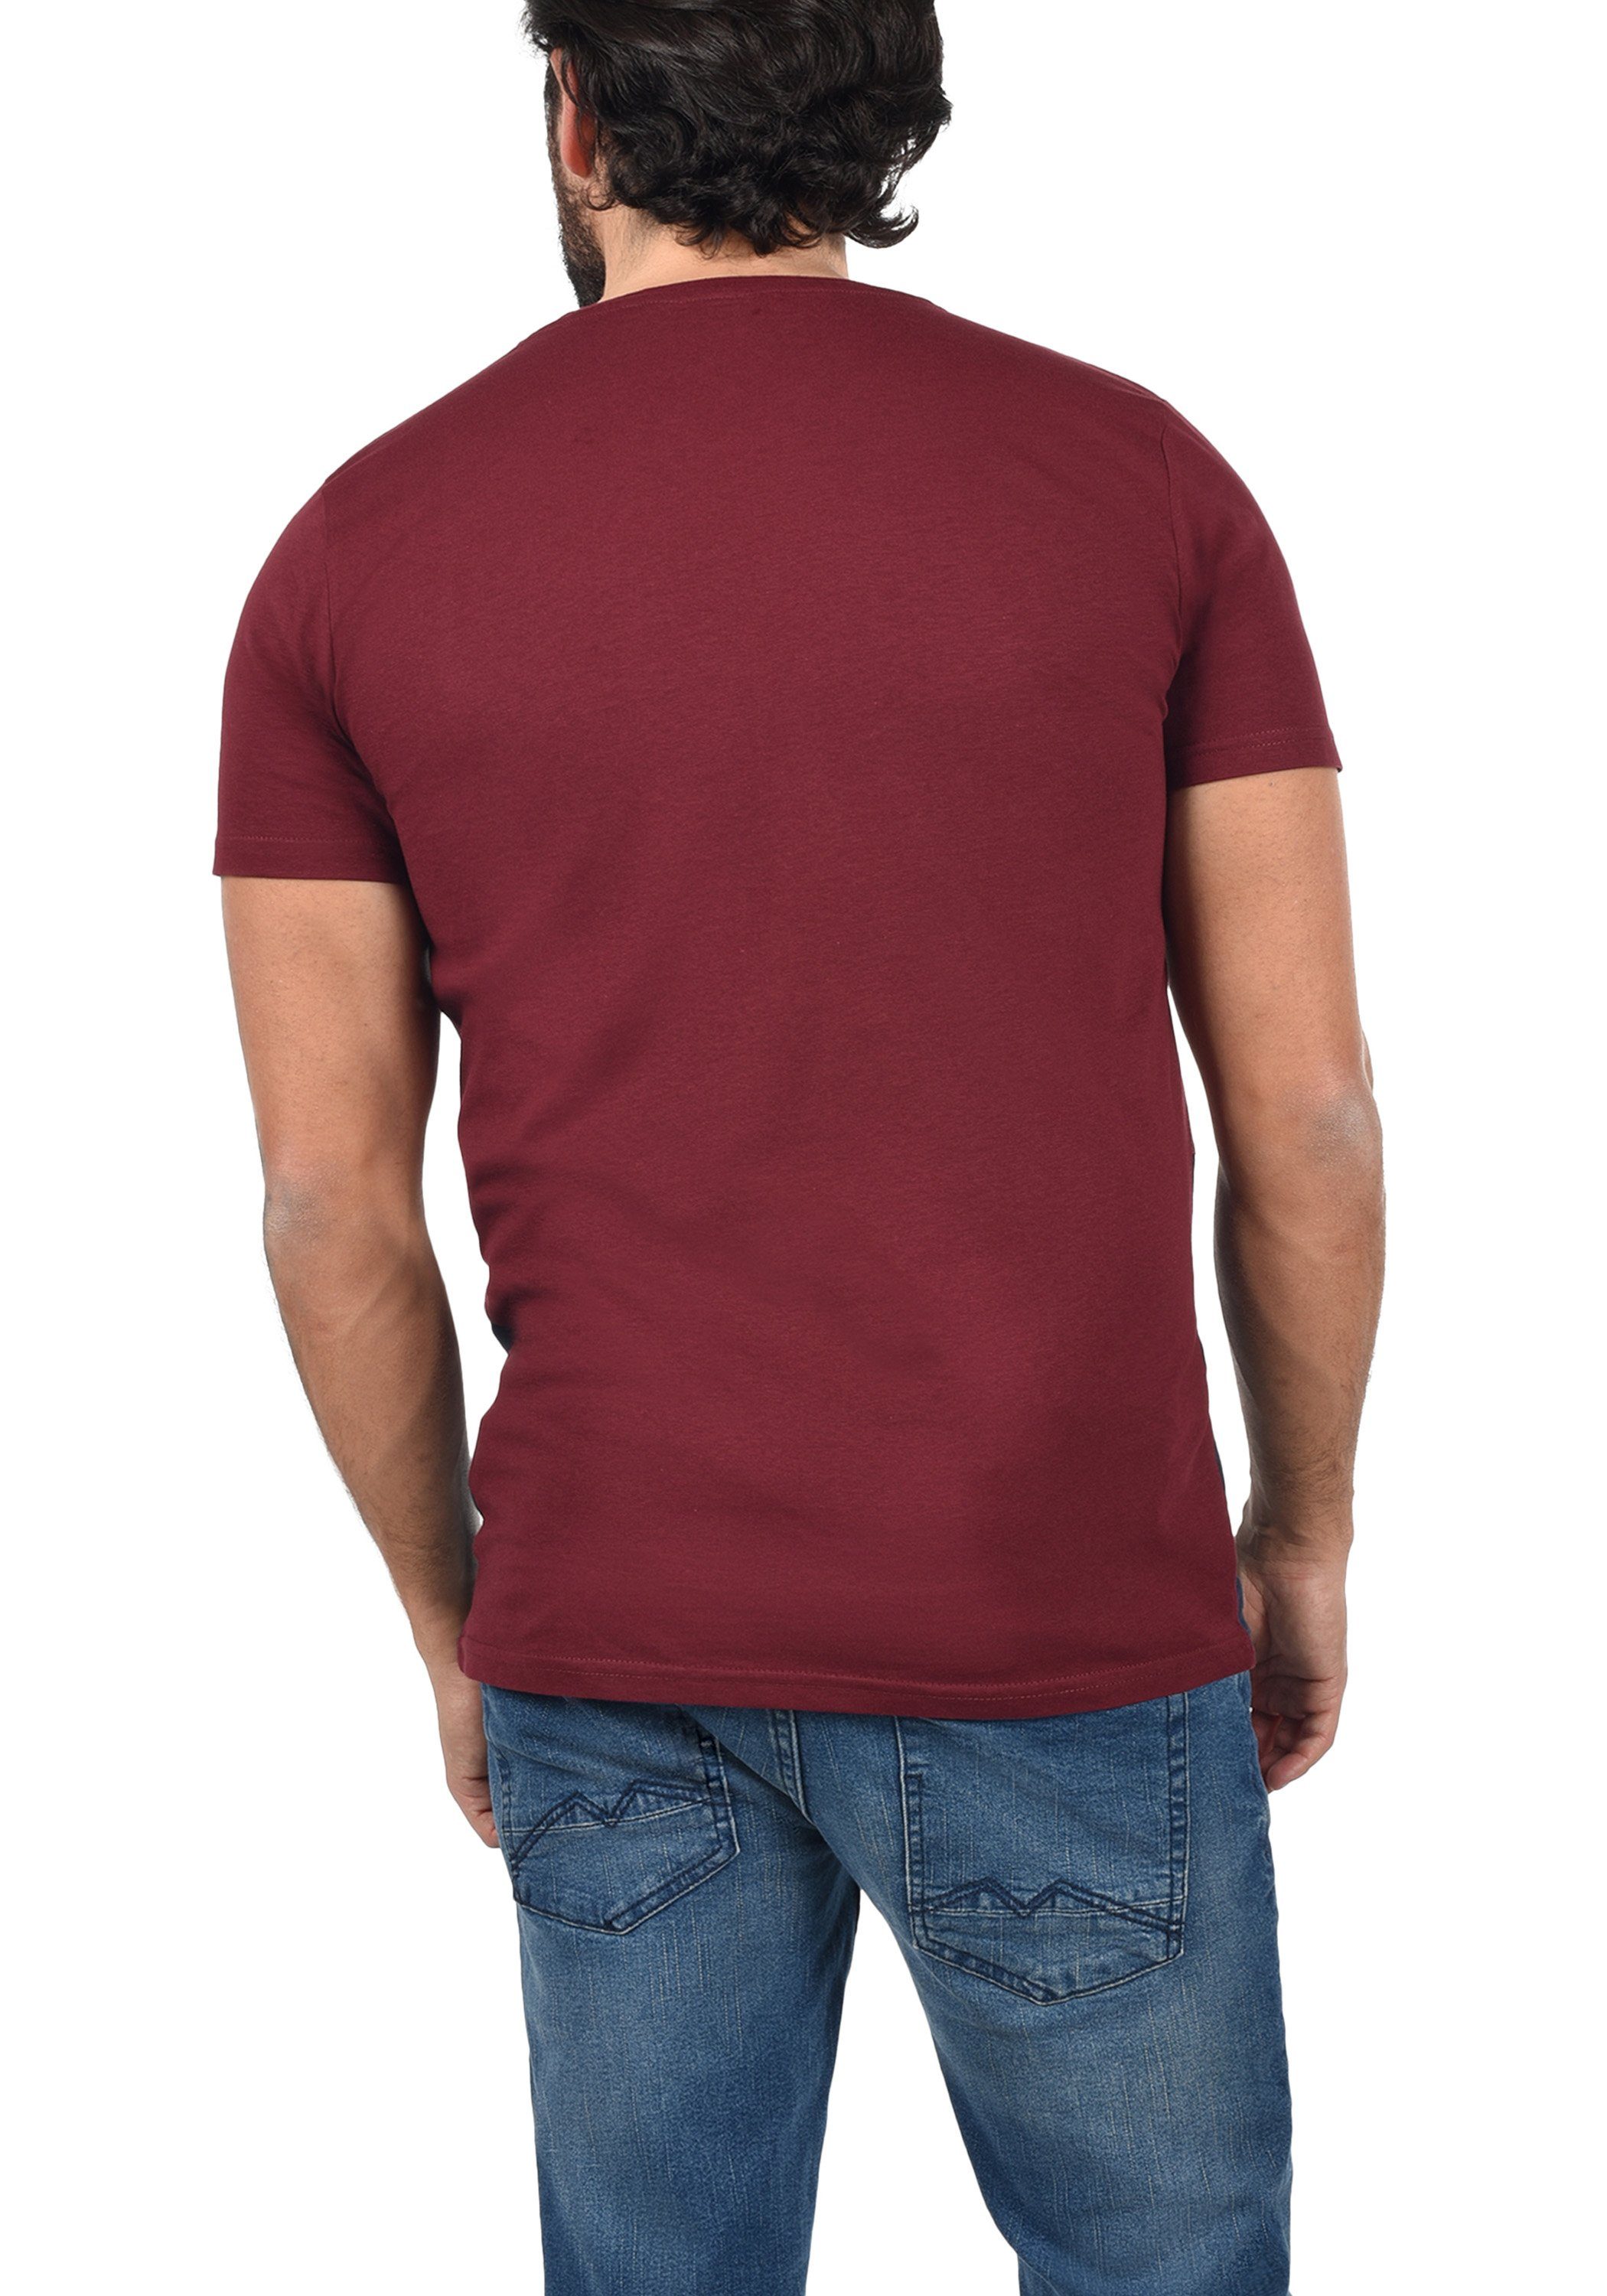 Red Rundhalsshirt T-Shirt Wine !Solid (0985) SDMingo